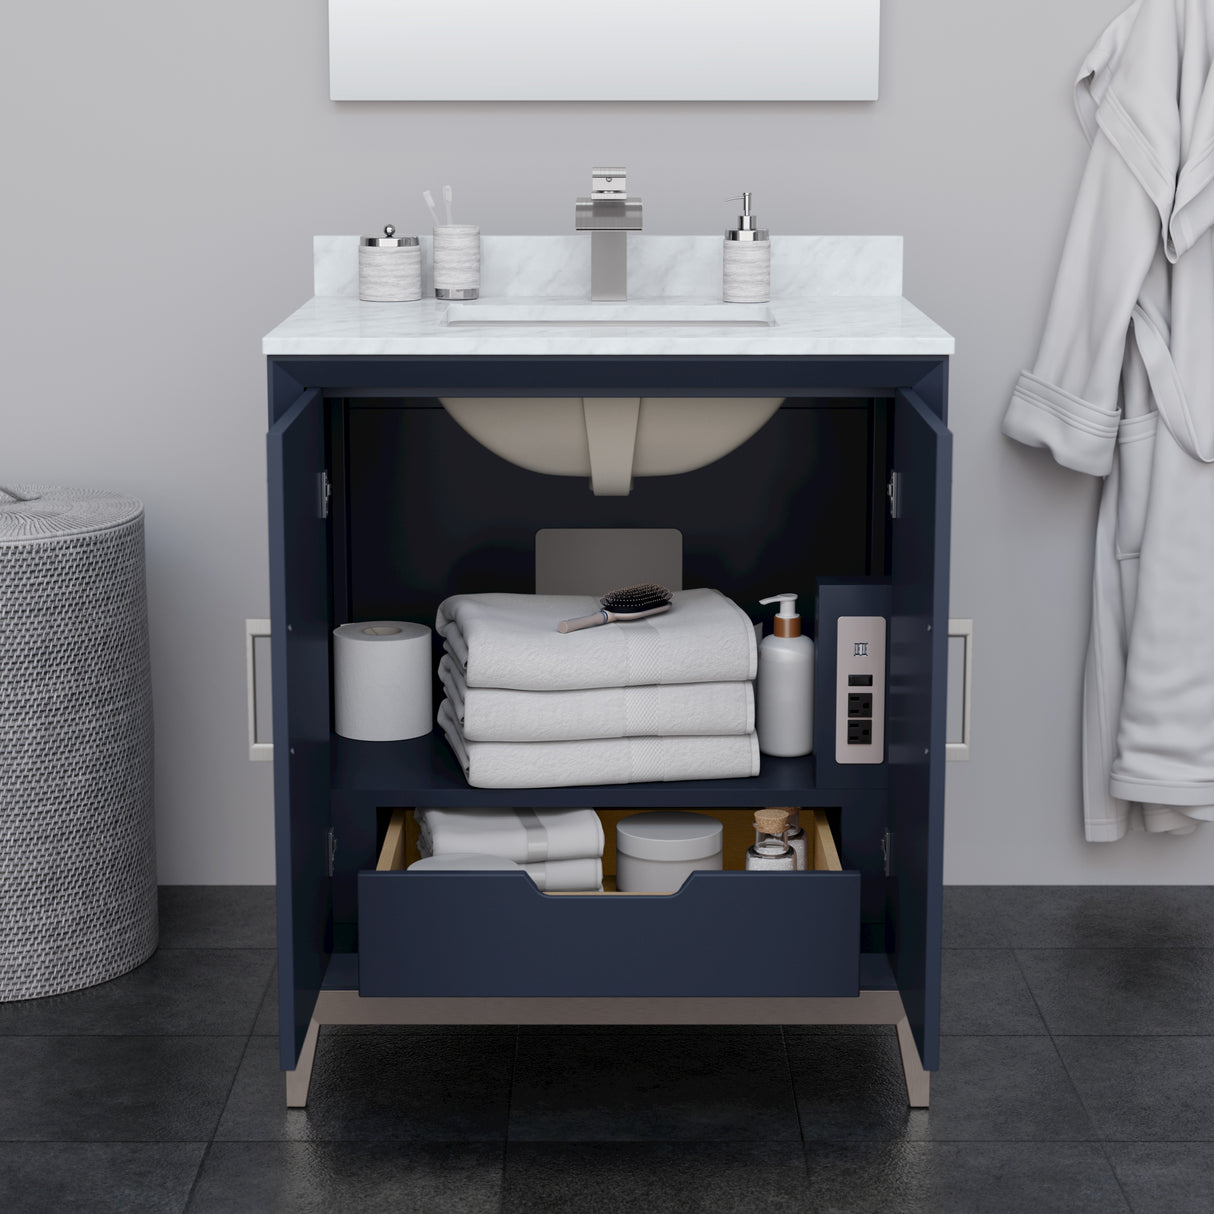 Marlena 30 Inch Single Bathroom Vanity in Dark Blue No Countertop No Sink Brushed Nickel Trim